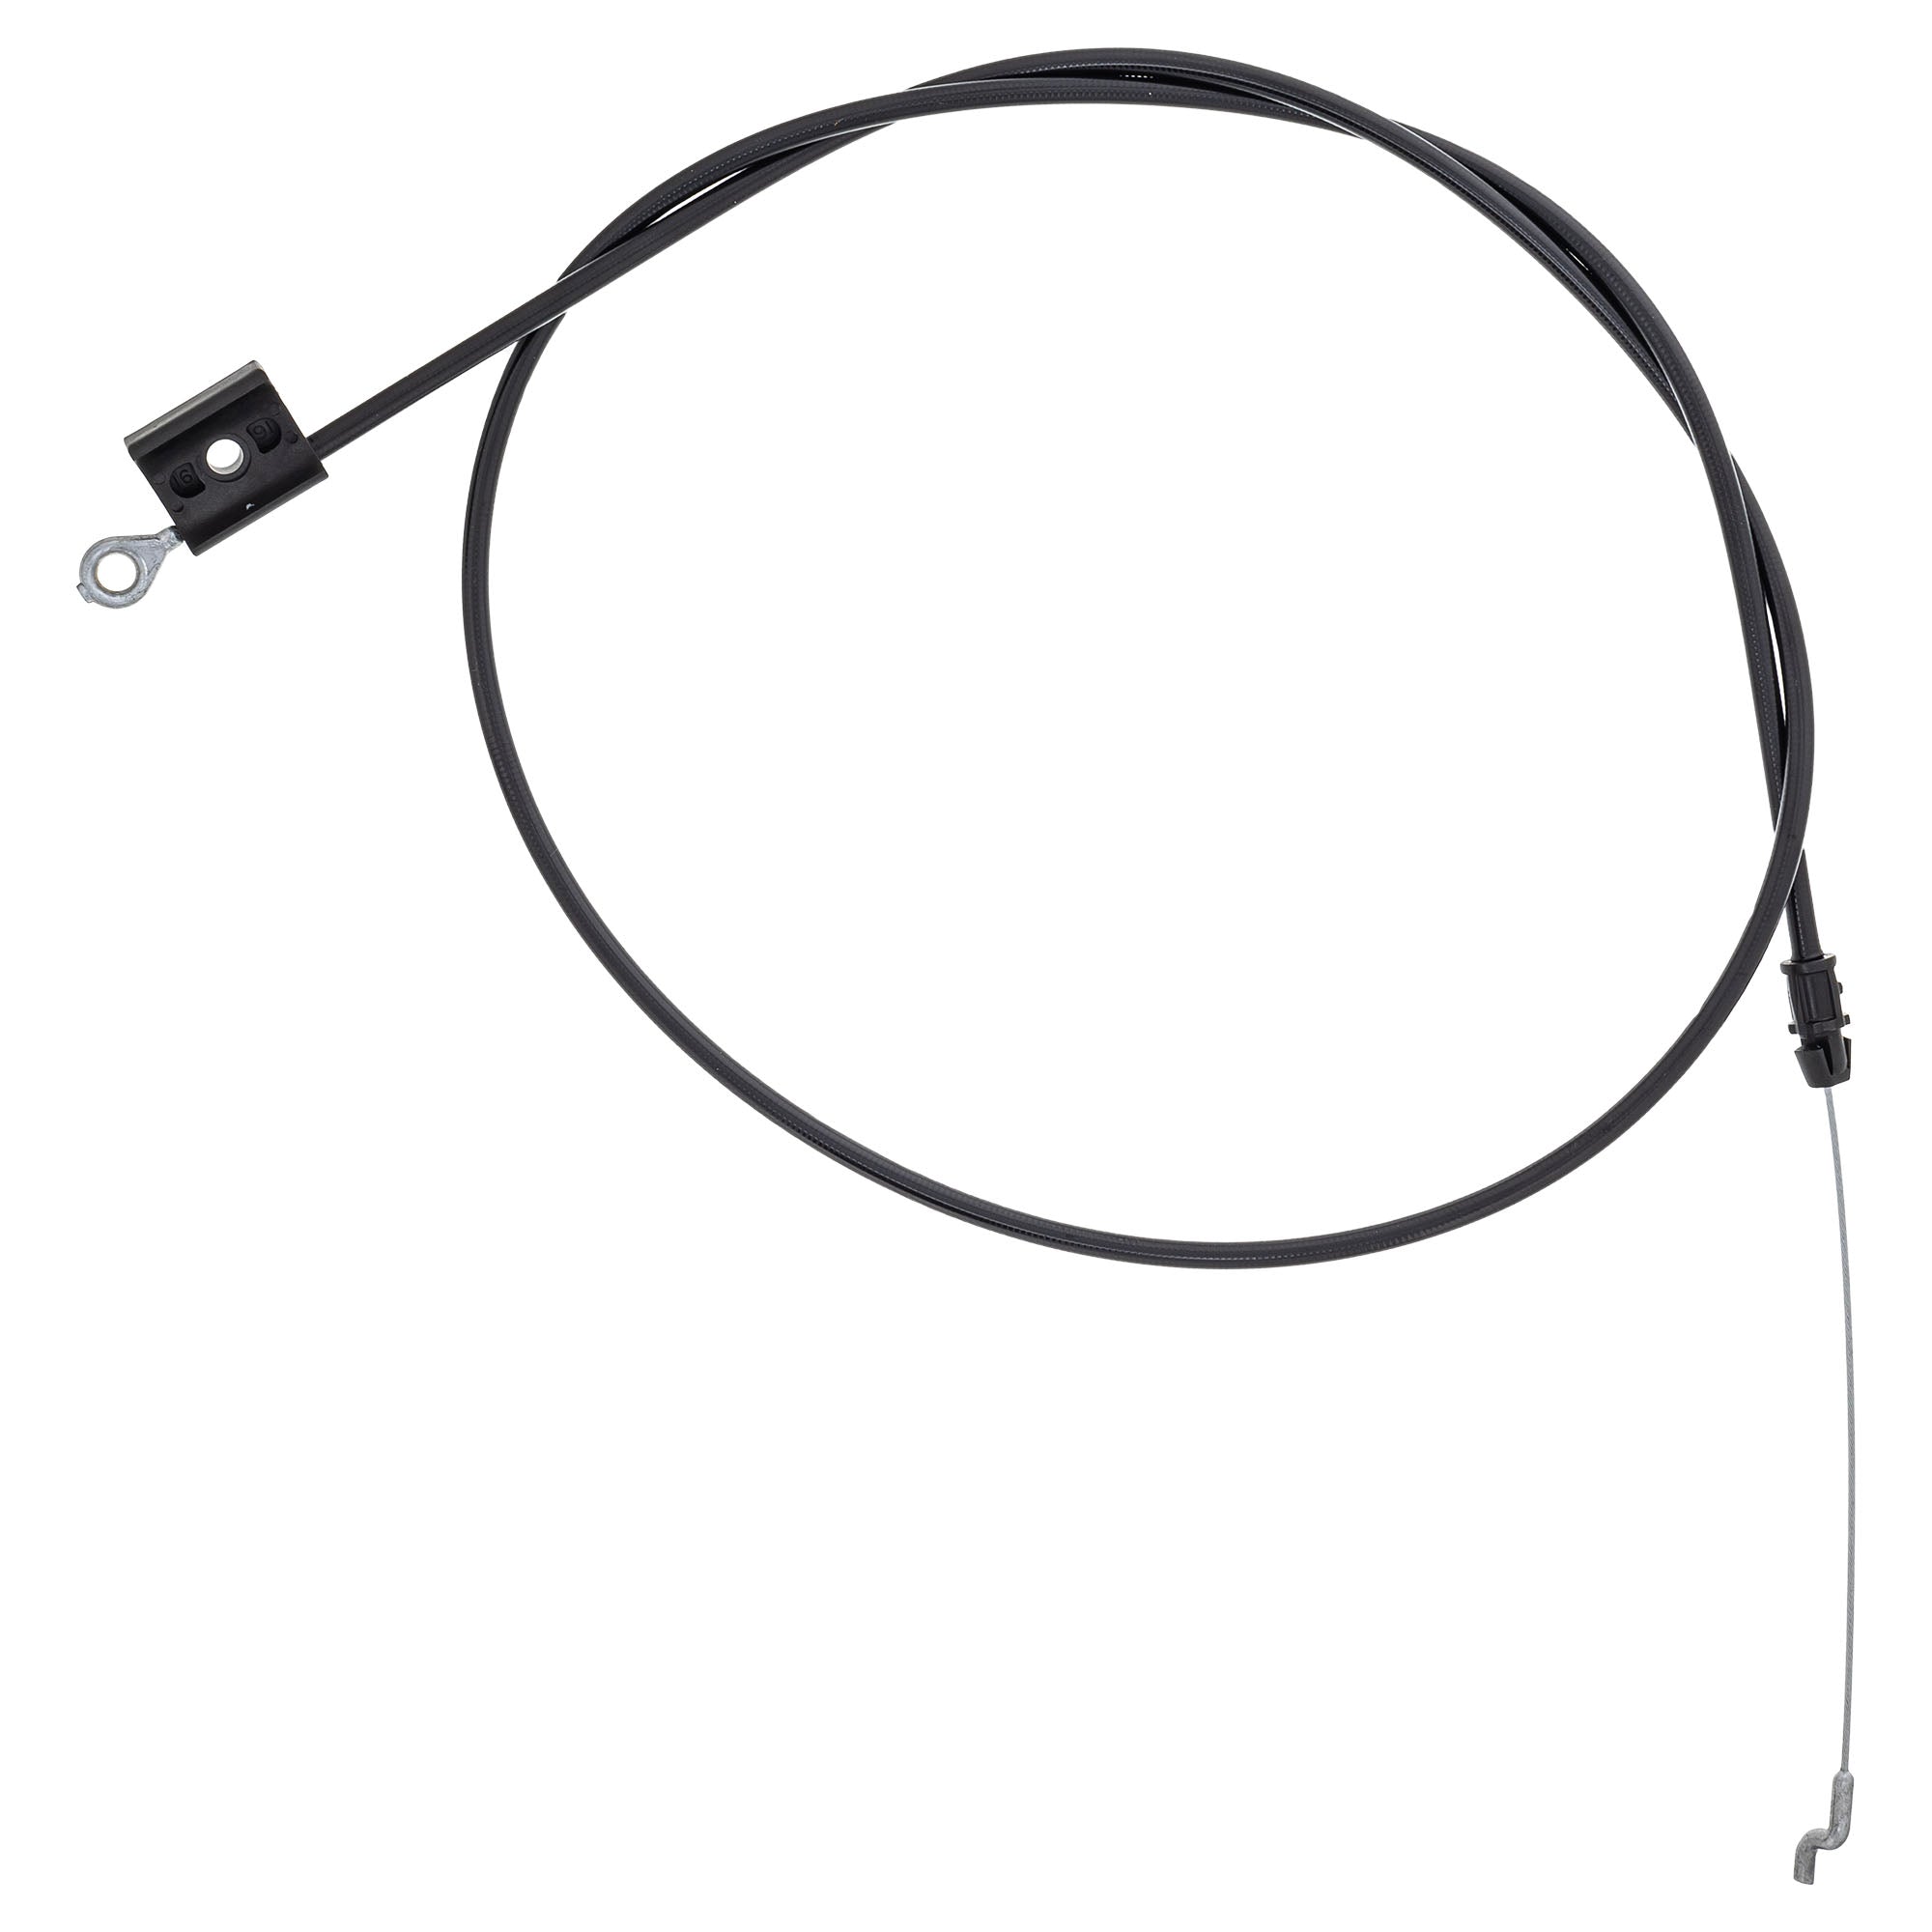 John Deere GC00036 Push Pull Cable